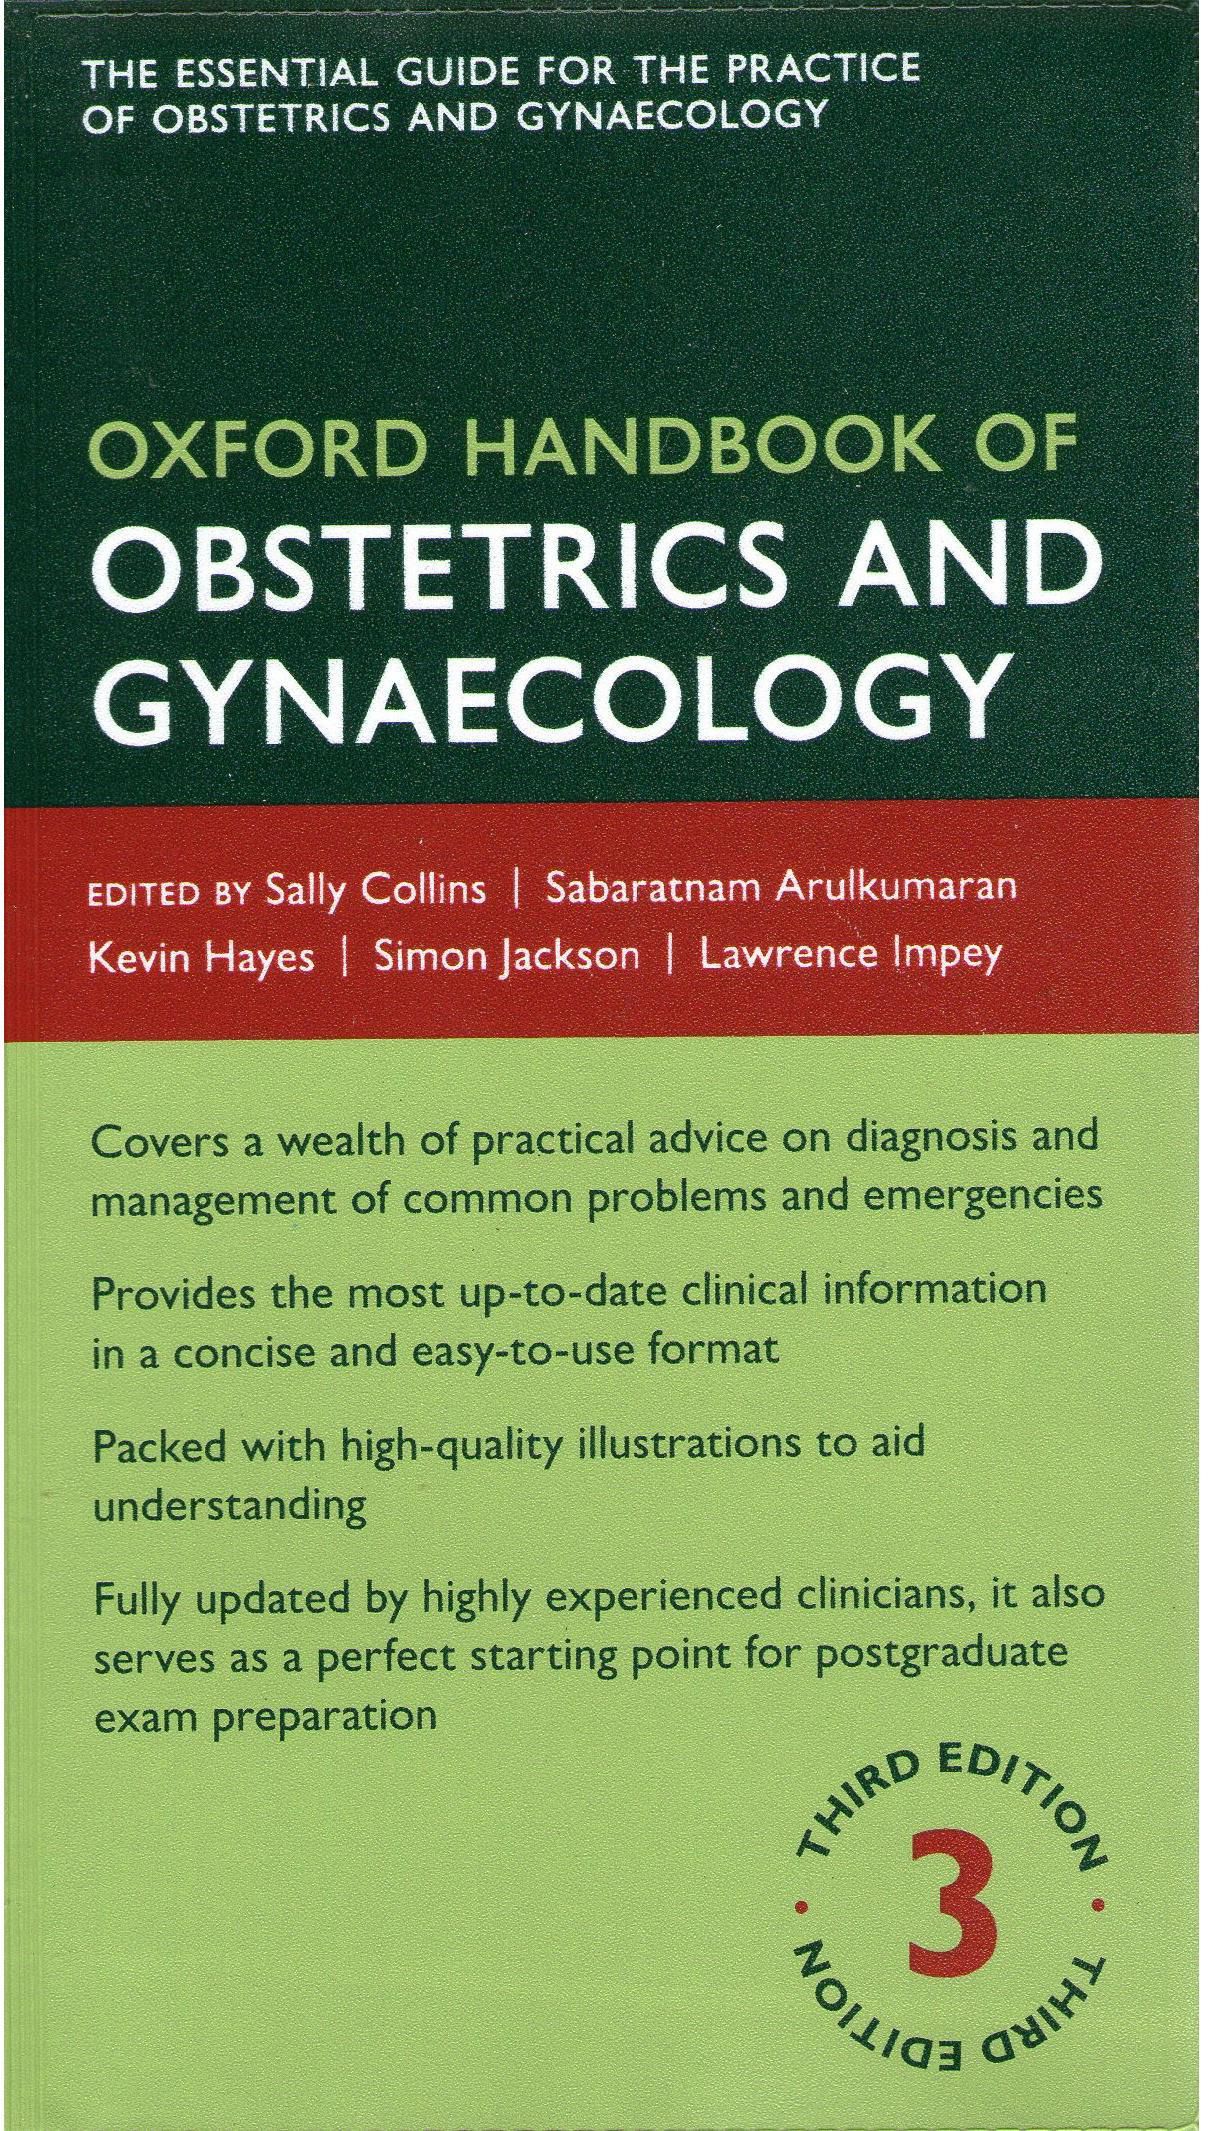 Oxford Handbook of Obstetrics and Gynaecology (Oxford Medical Handbooks)